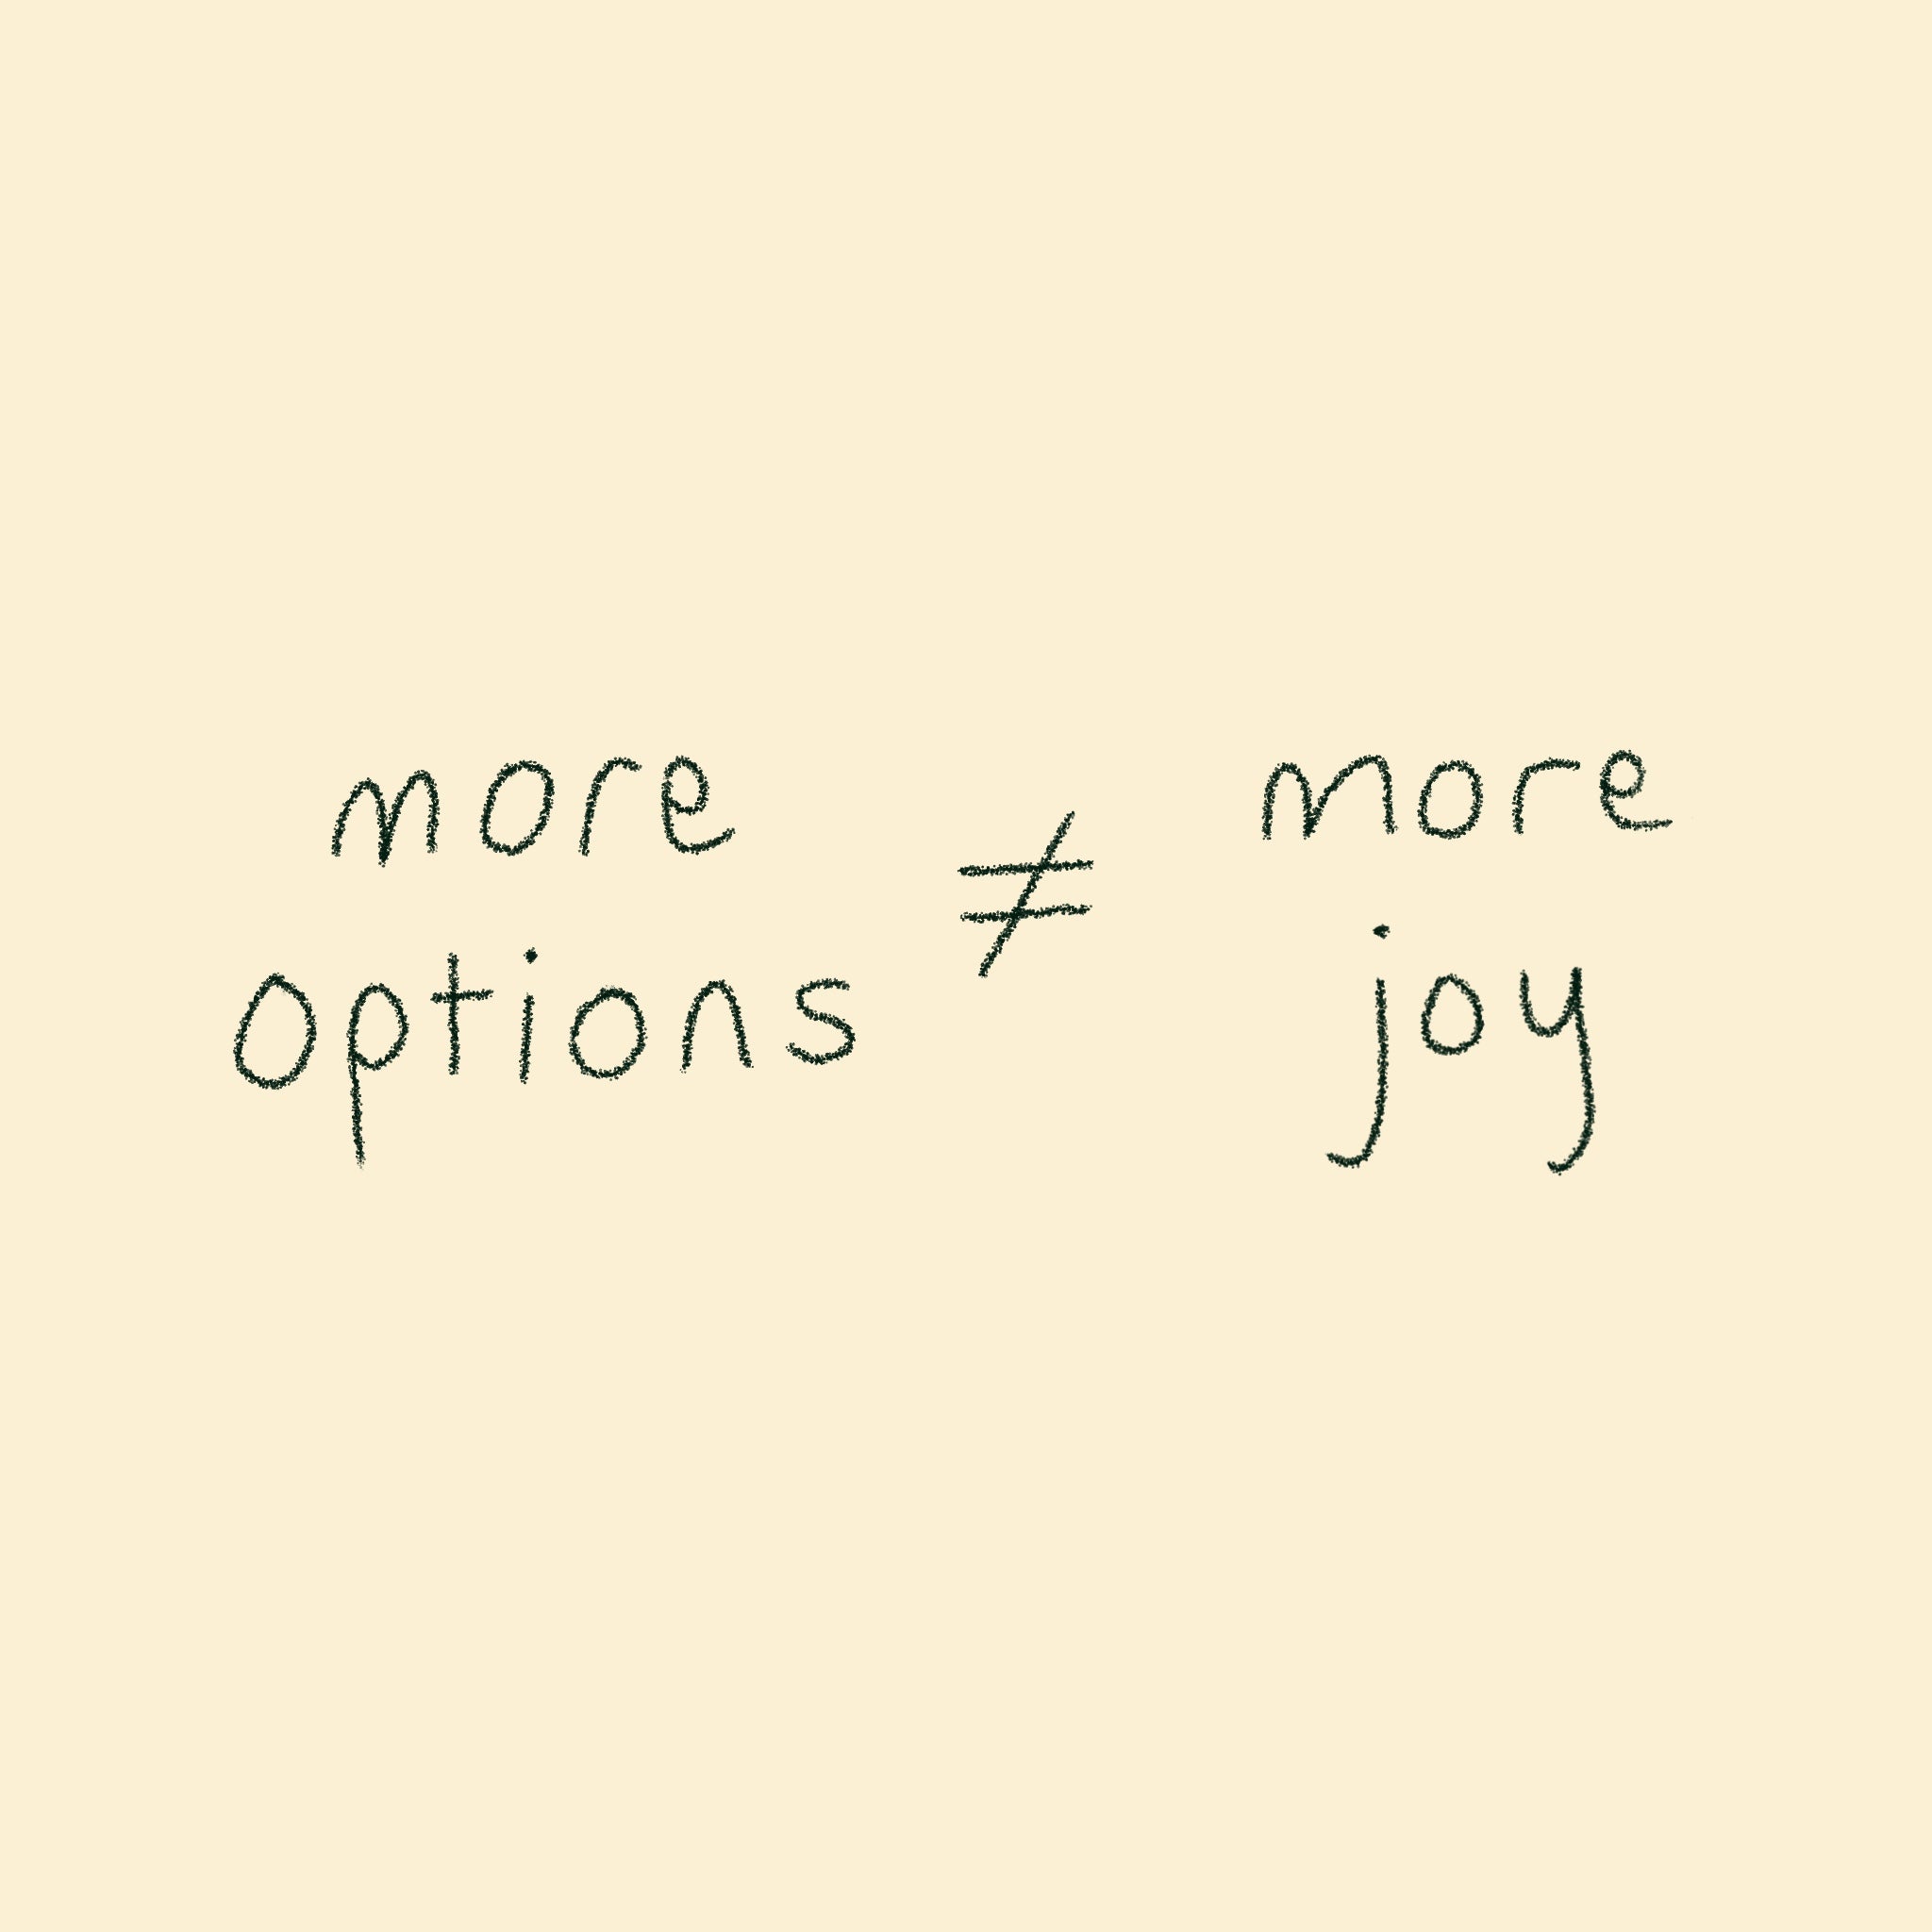 More options ≠ more joy